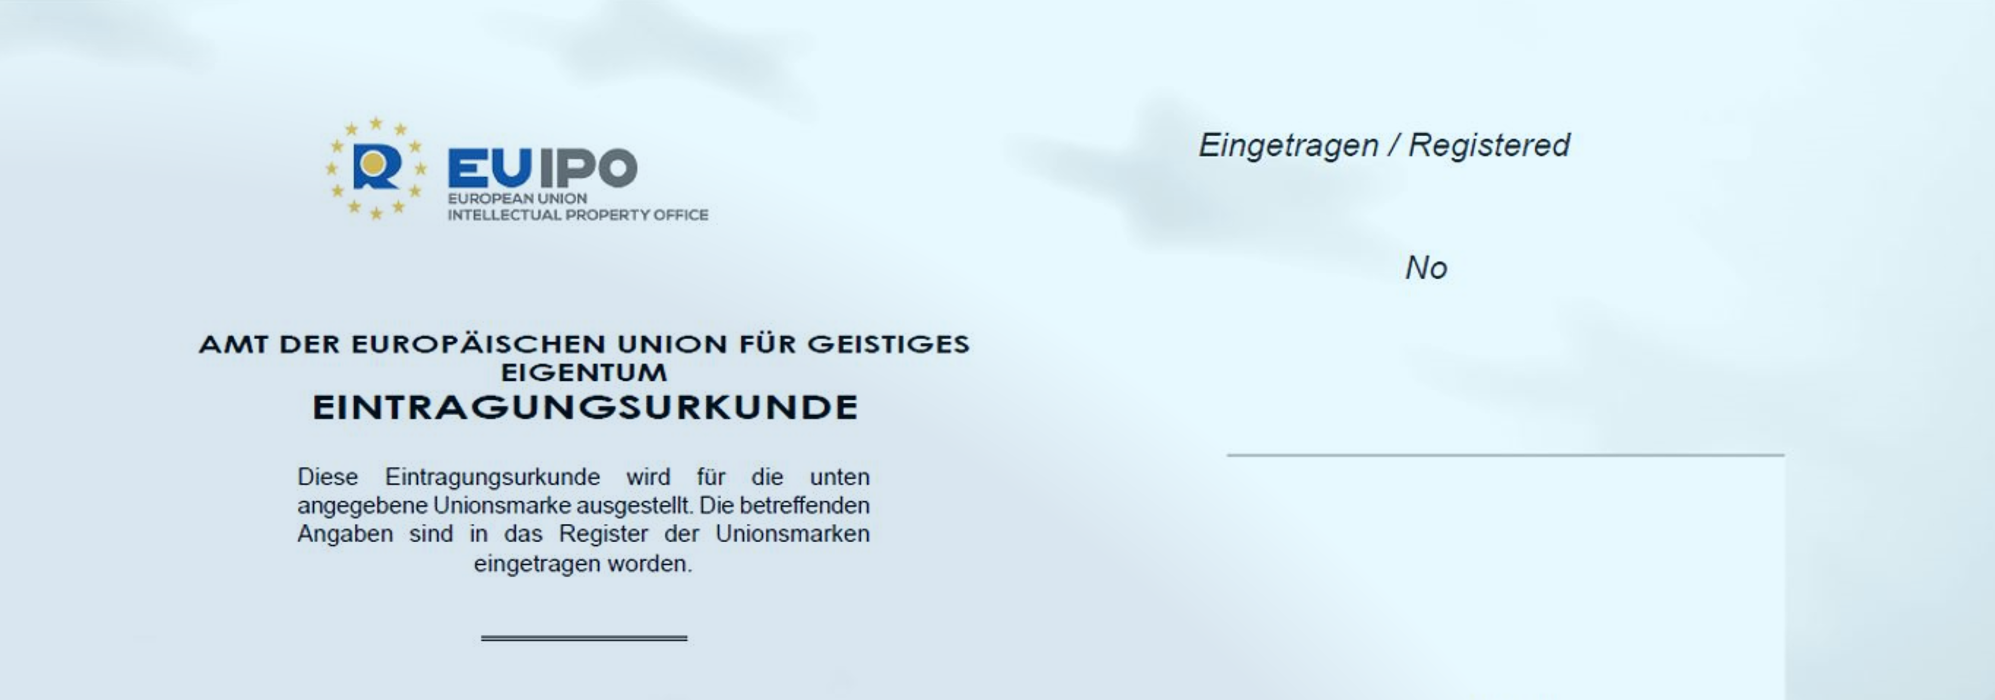 European Trade Mark Certificate